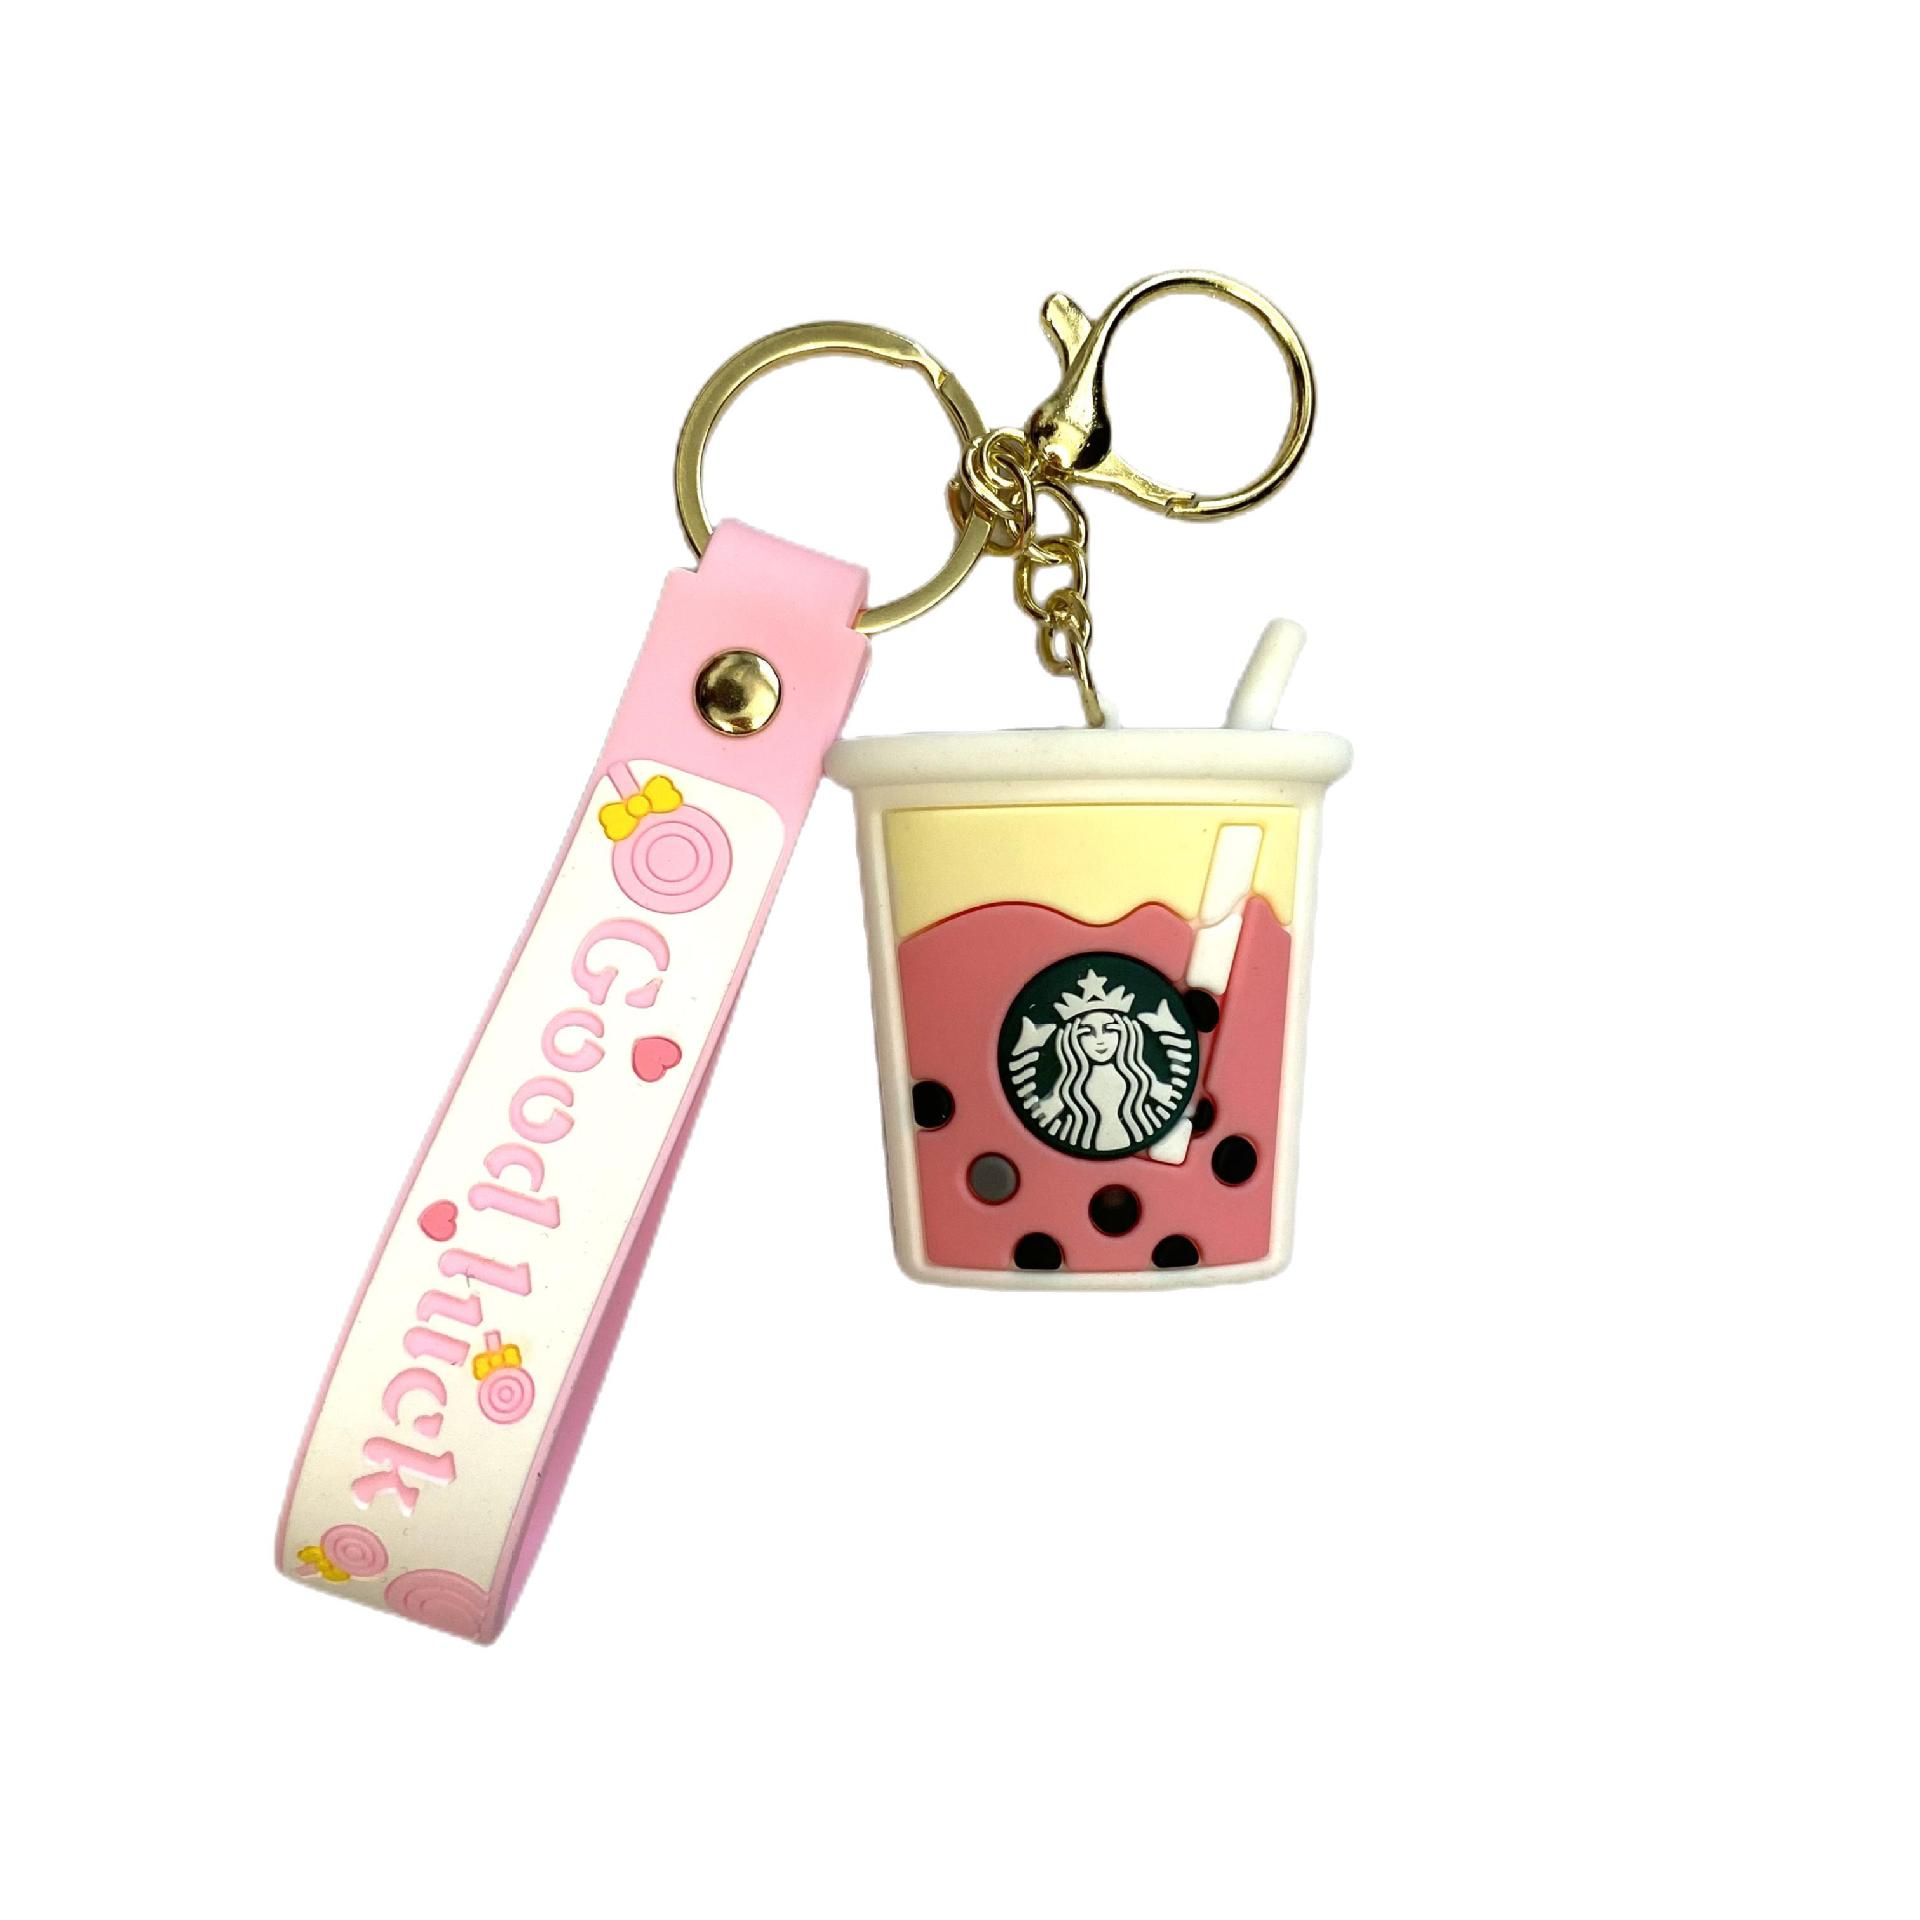 New Starbucks Milky Tea Cup Keychain Handbag Pendant Car Key Chain Schoolbag Accessories Small Gift Wholesale